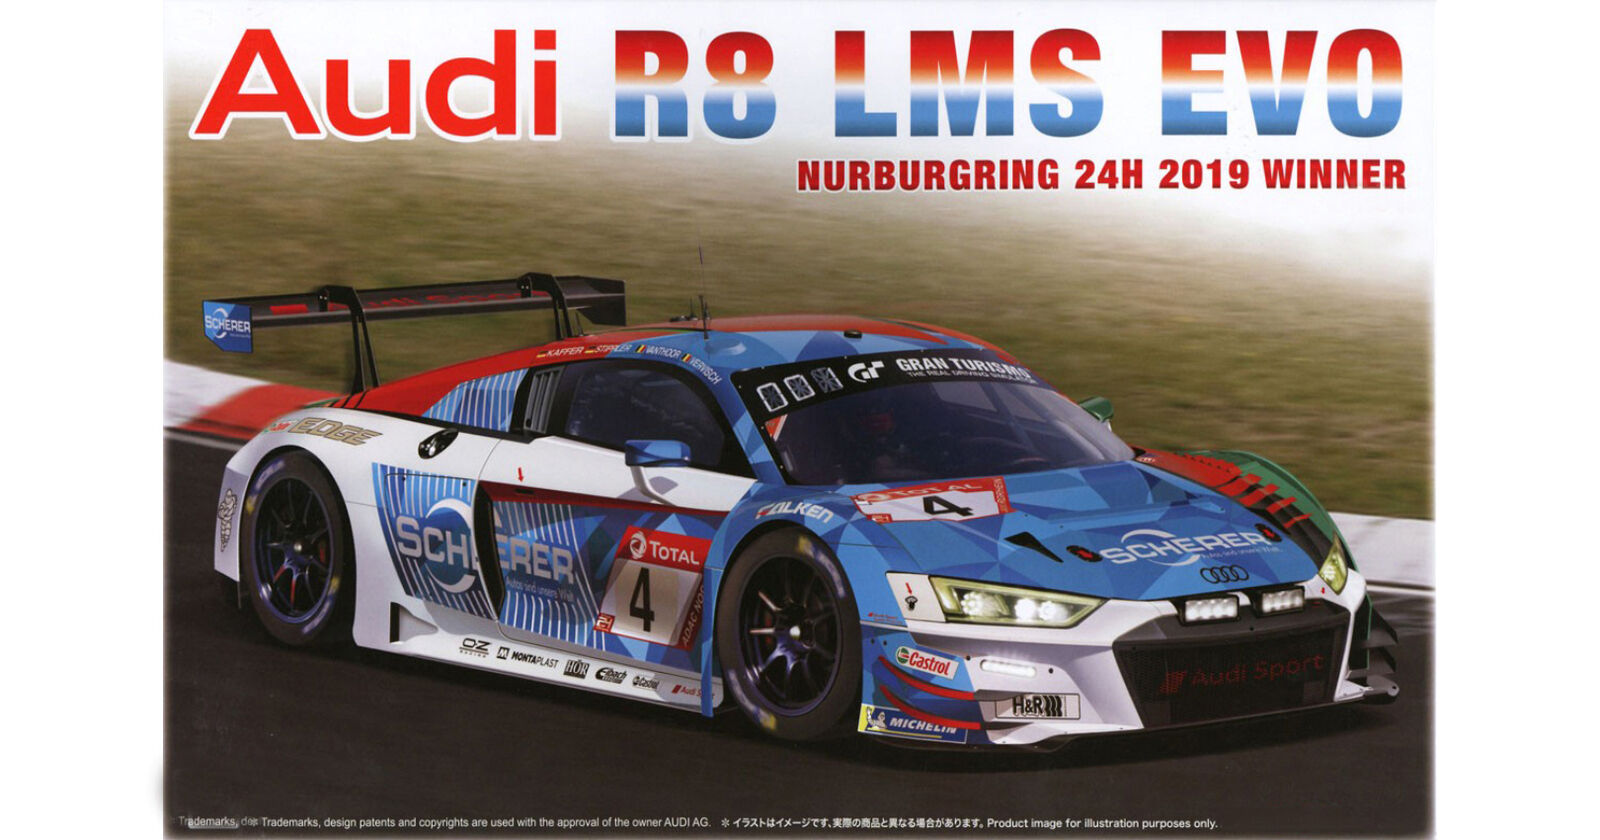 Audi R8 LMS Evo 24Hour Nurburgring